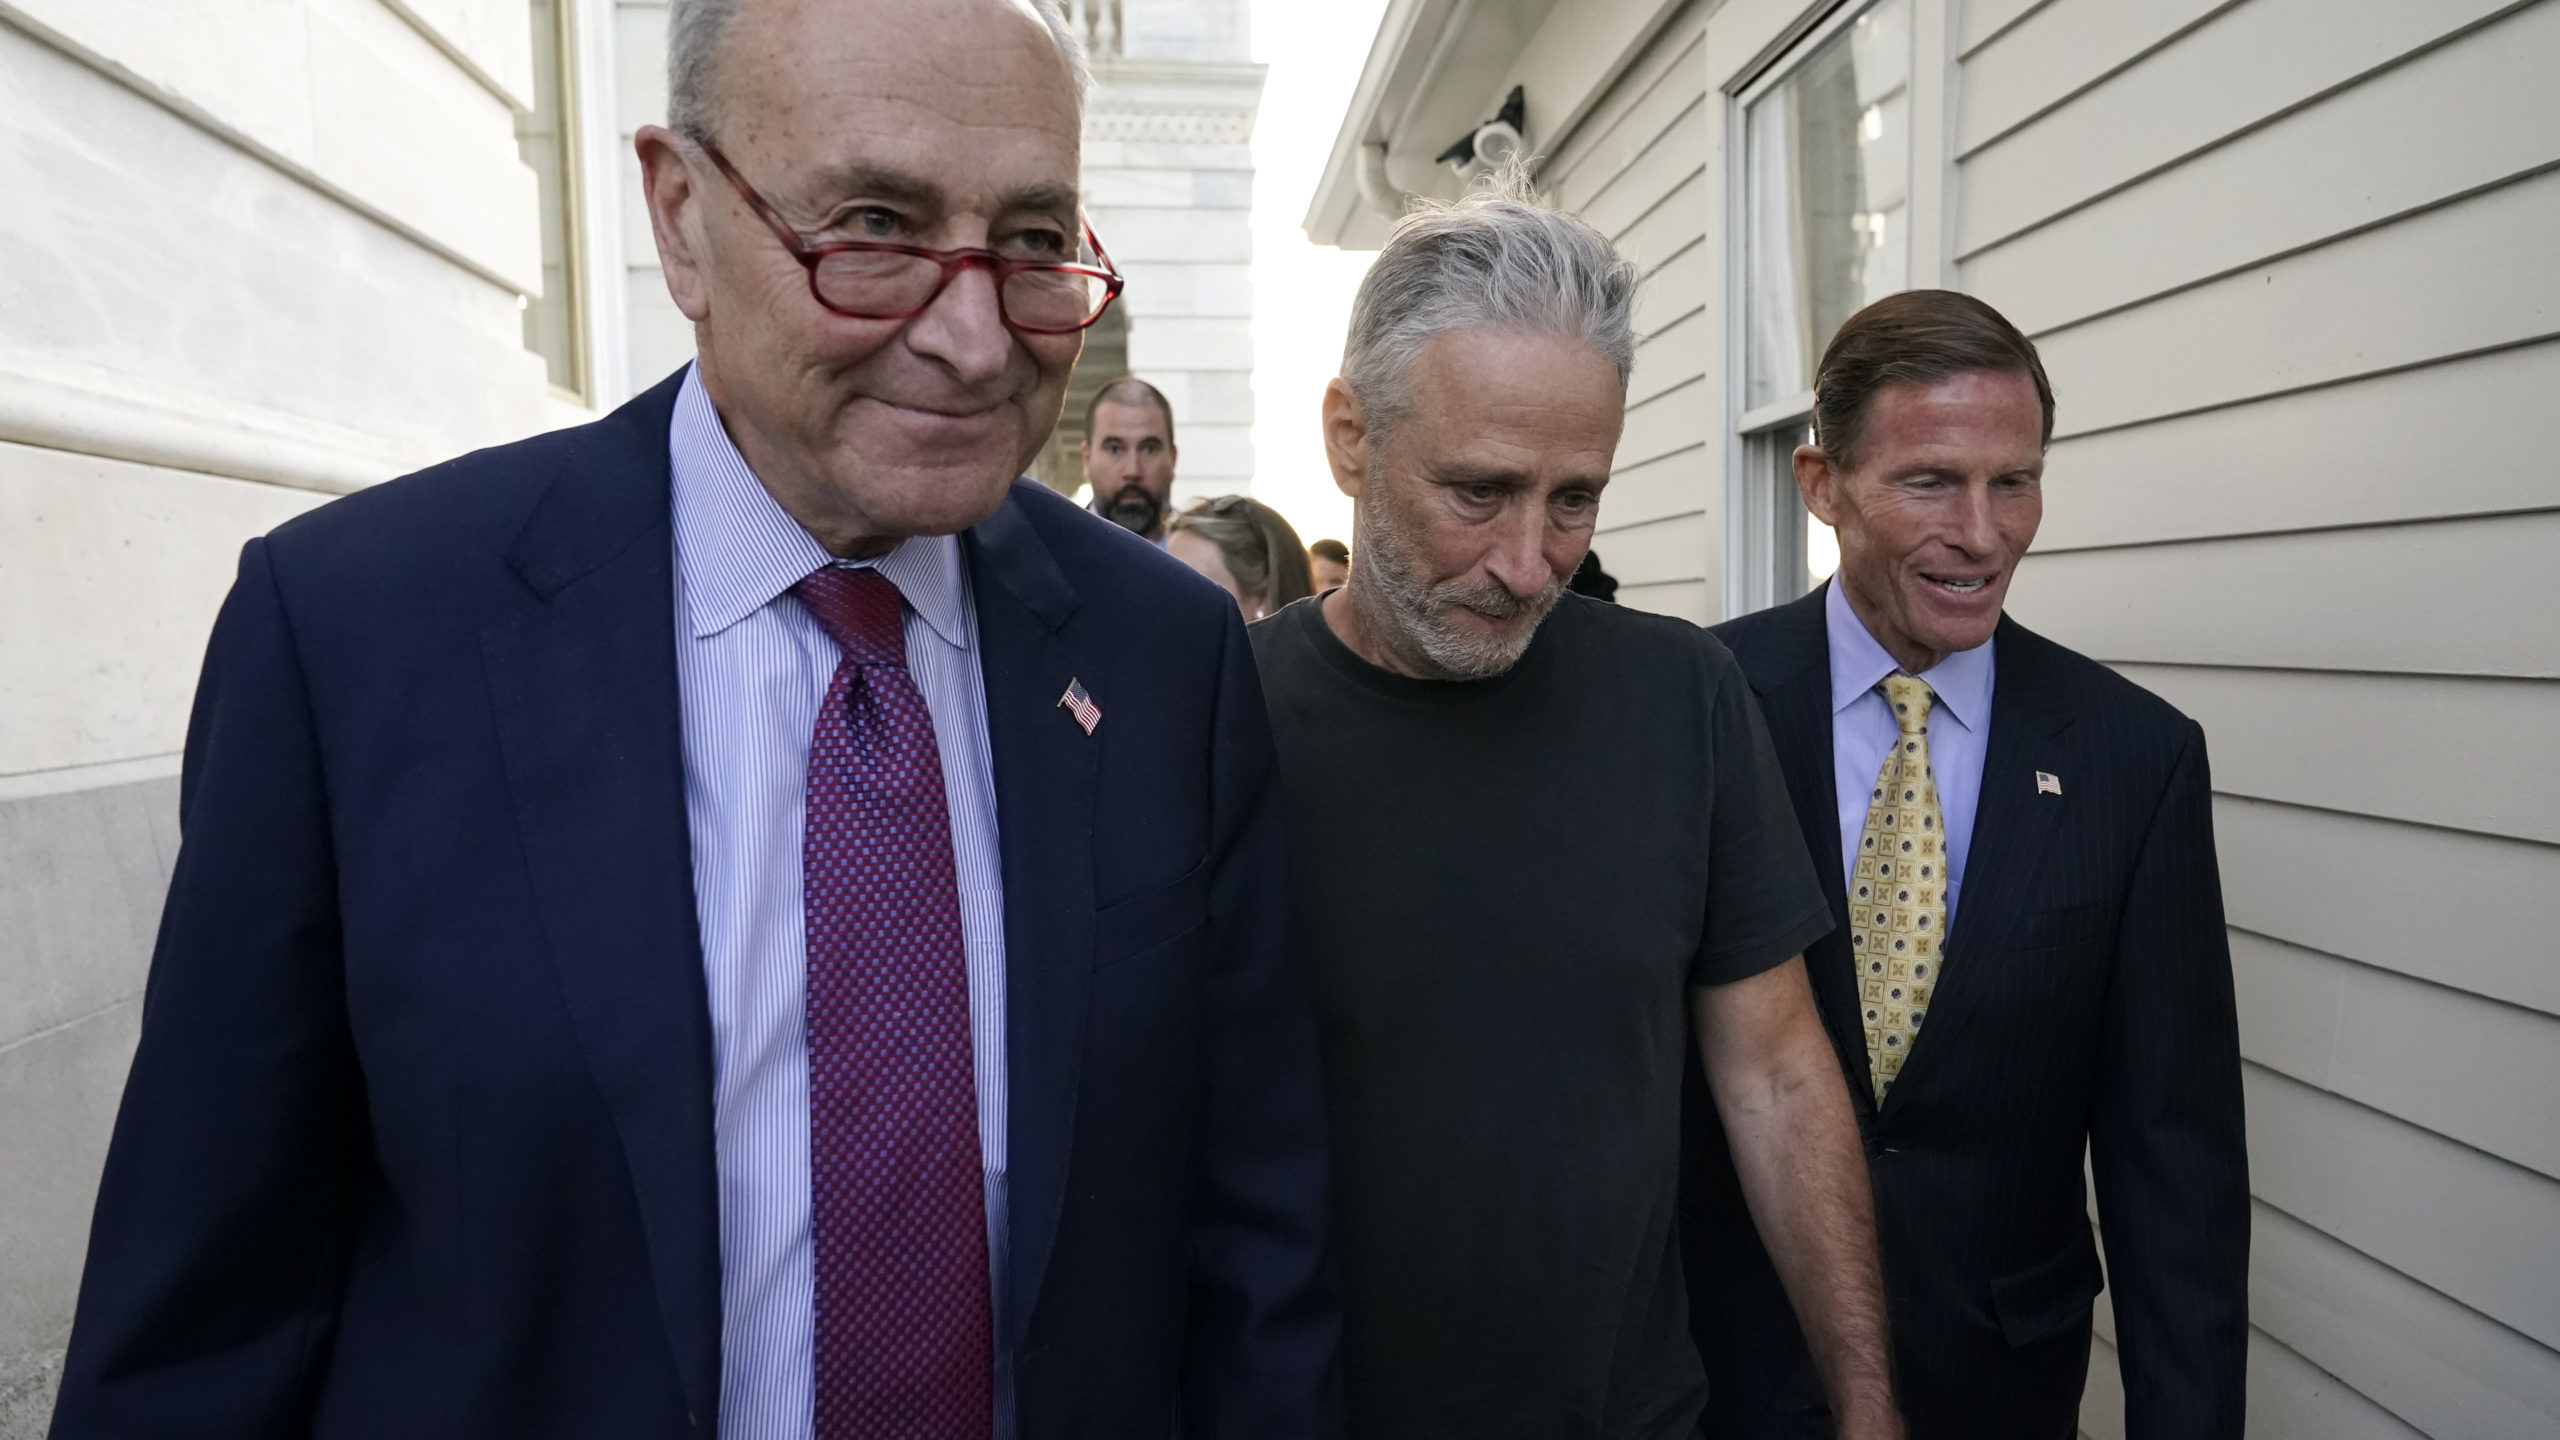 Jon Steward, center, walks with Senate Majority Leader Chuck Schumer of N.Y., left, and Sen. Richar...